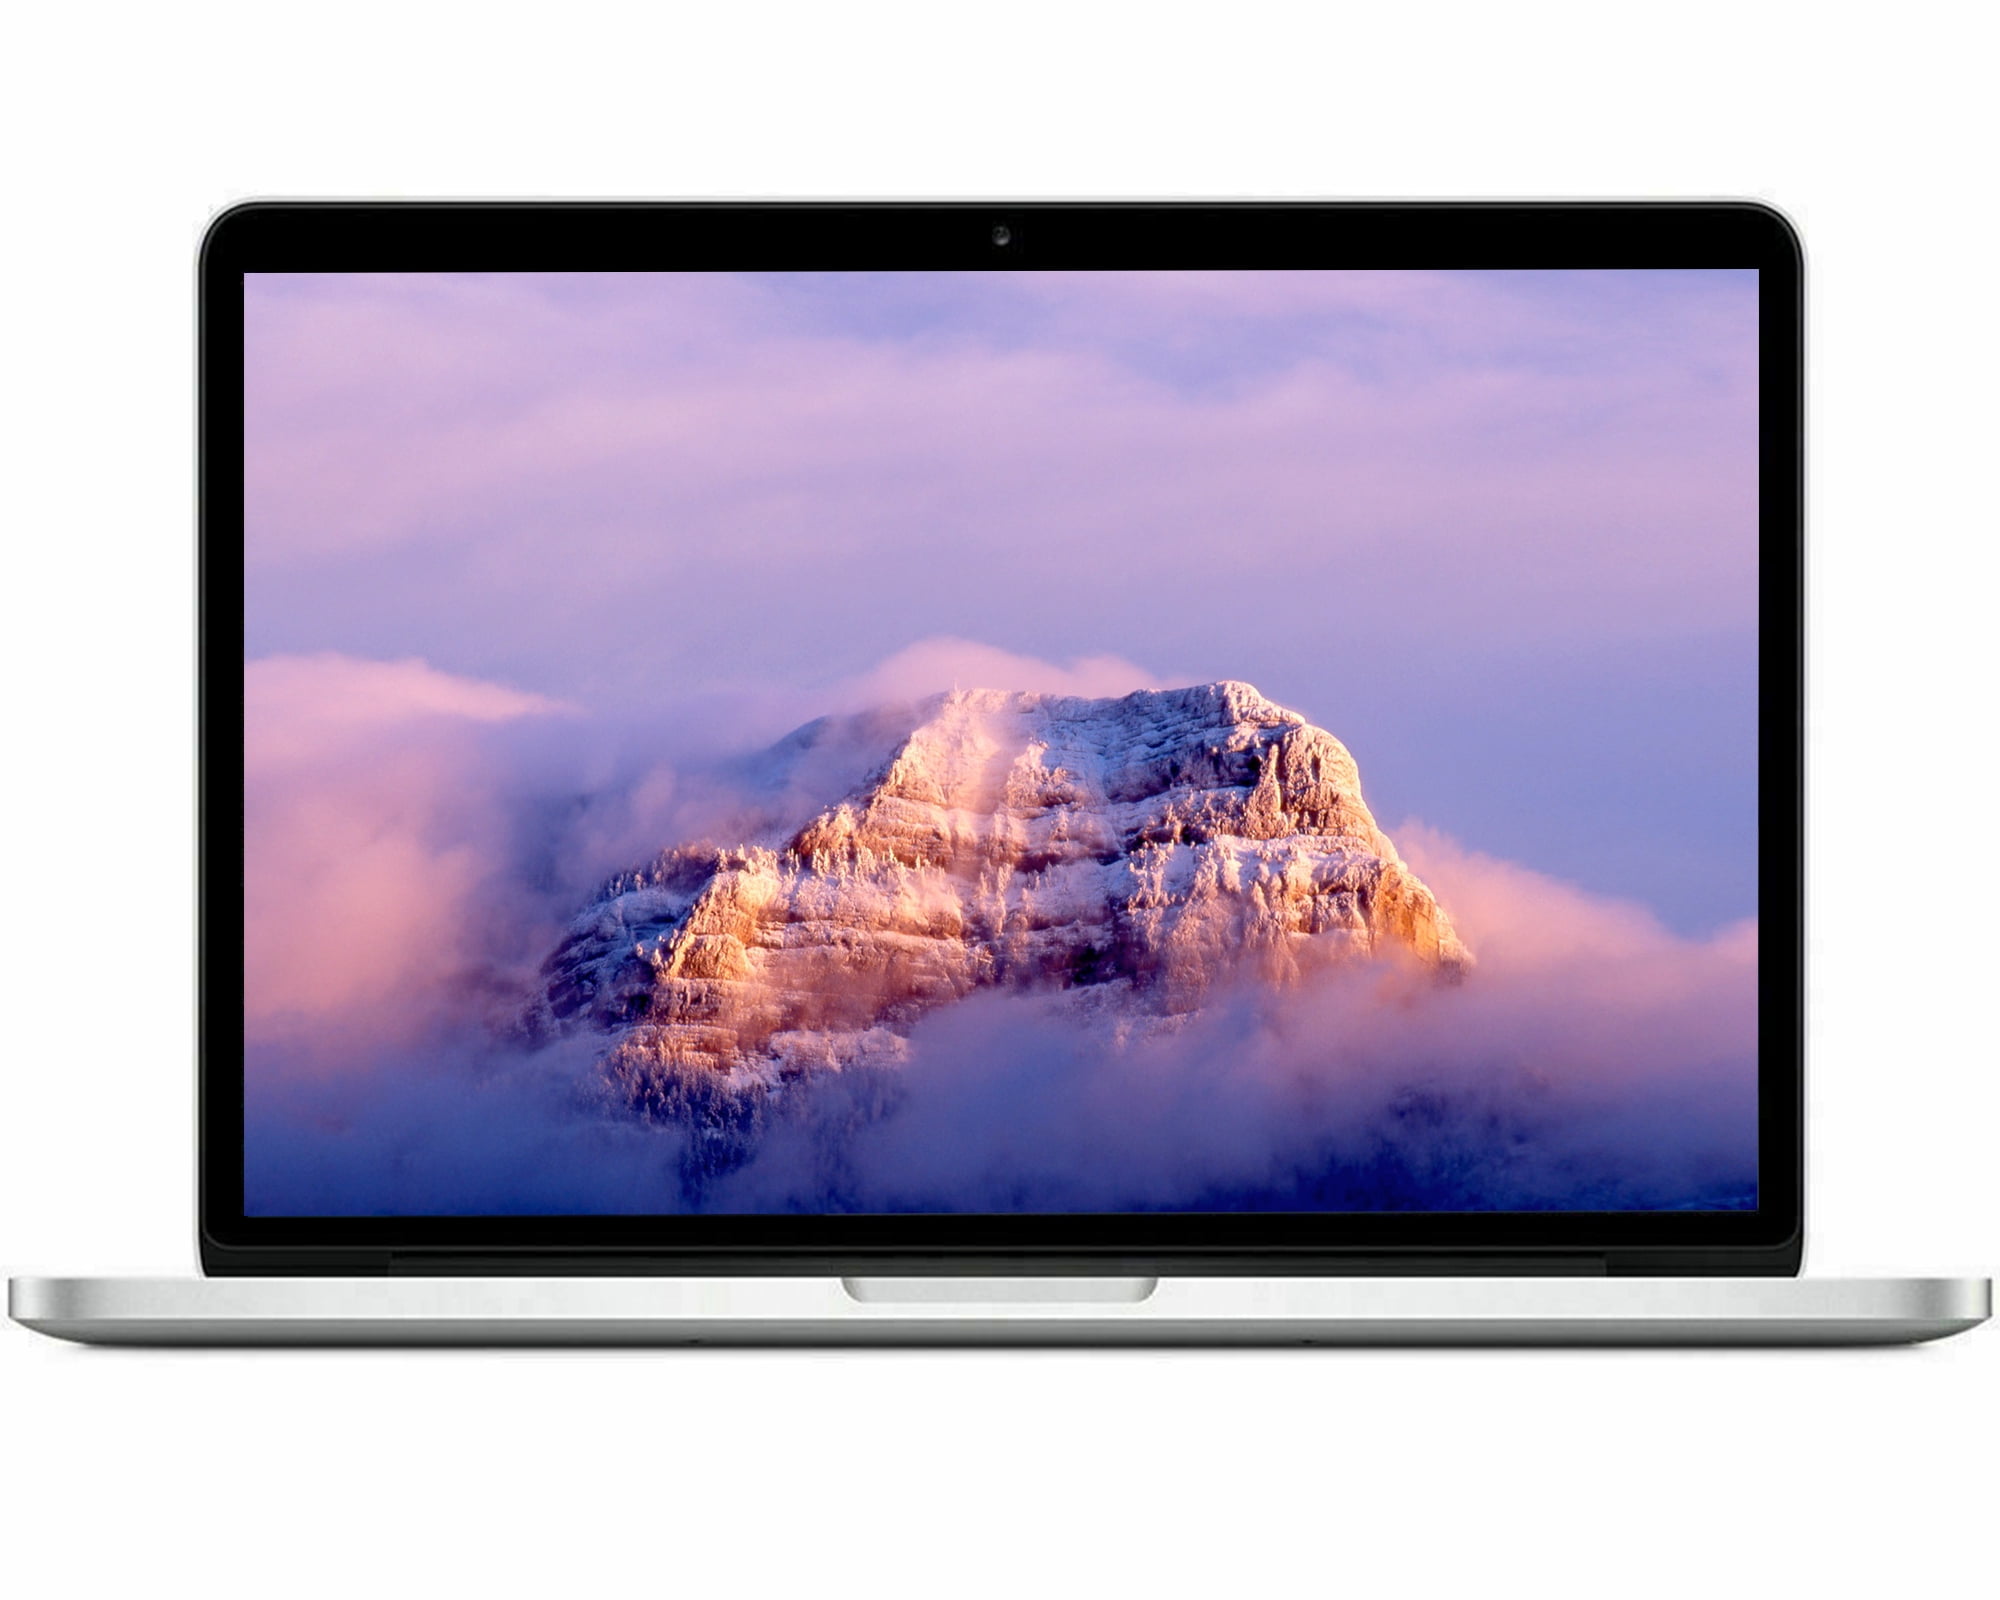 Ellers dug Danmark Apple Macbook Pro 13.3" 2.5 GHz Core i5, 500GB HDD, 4GB DDR3L RAM -  MD101LL/A (Non-Retail Packaging) - Walmart.com